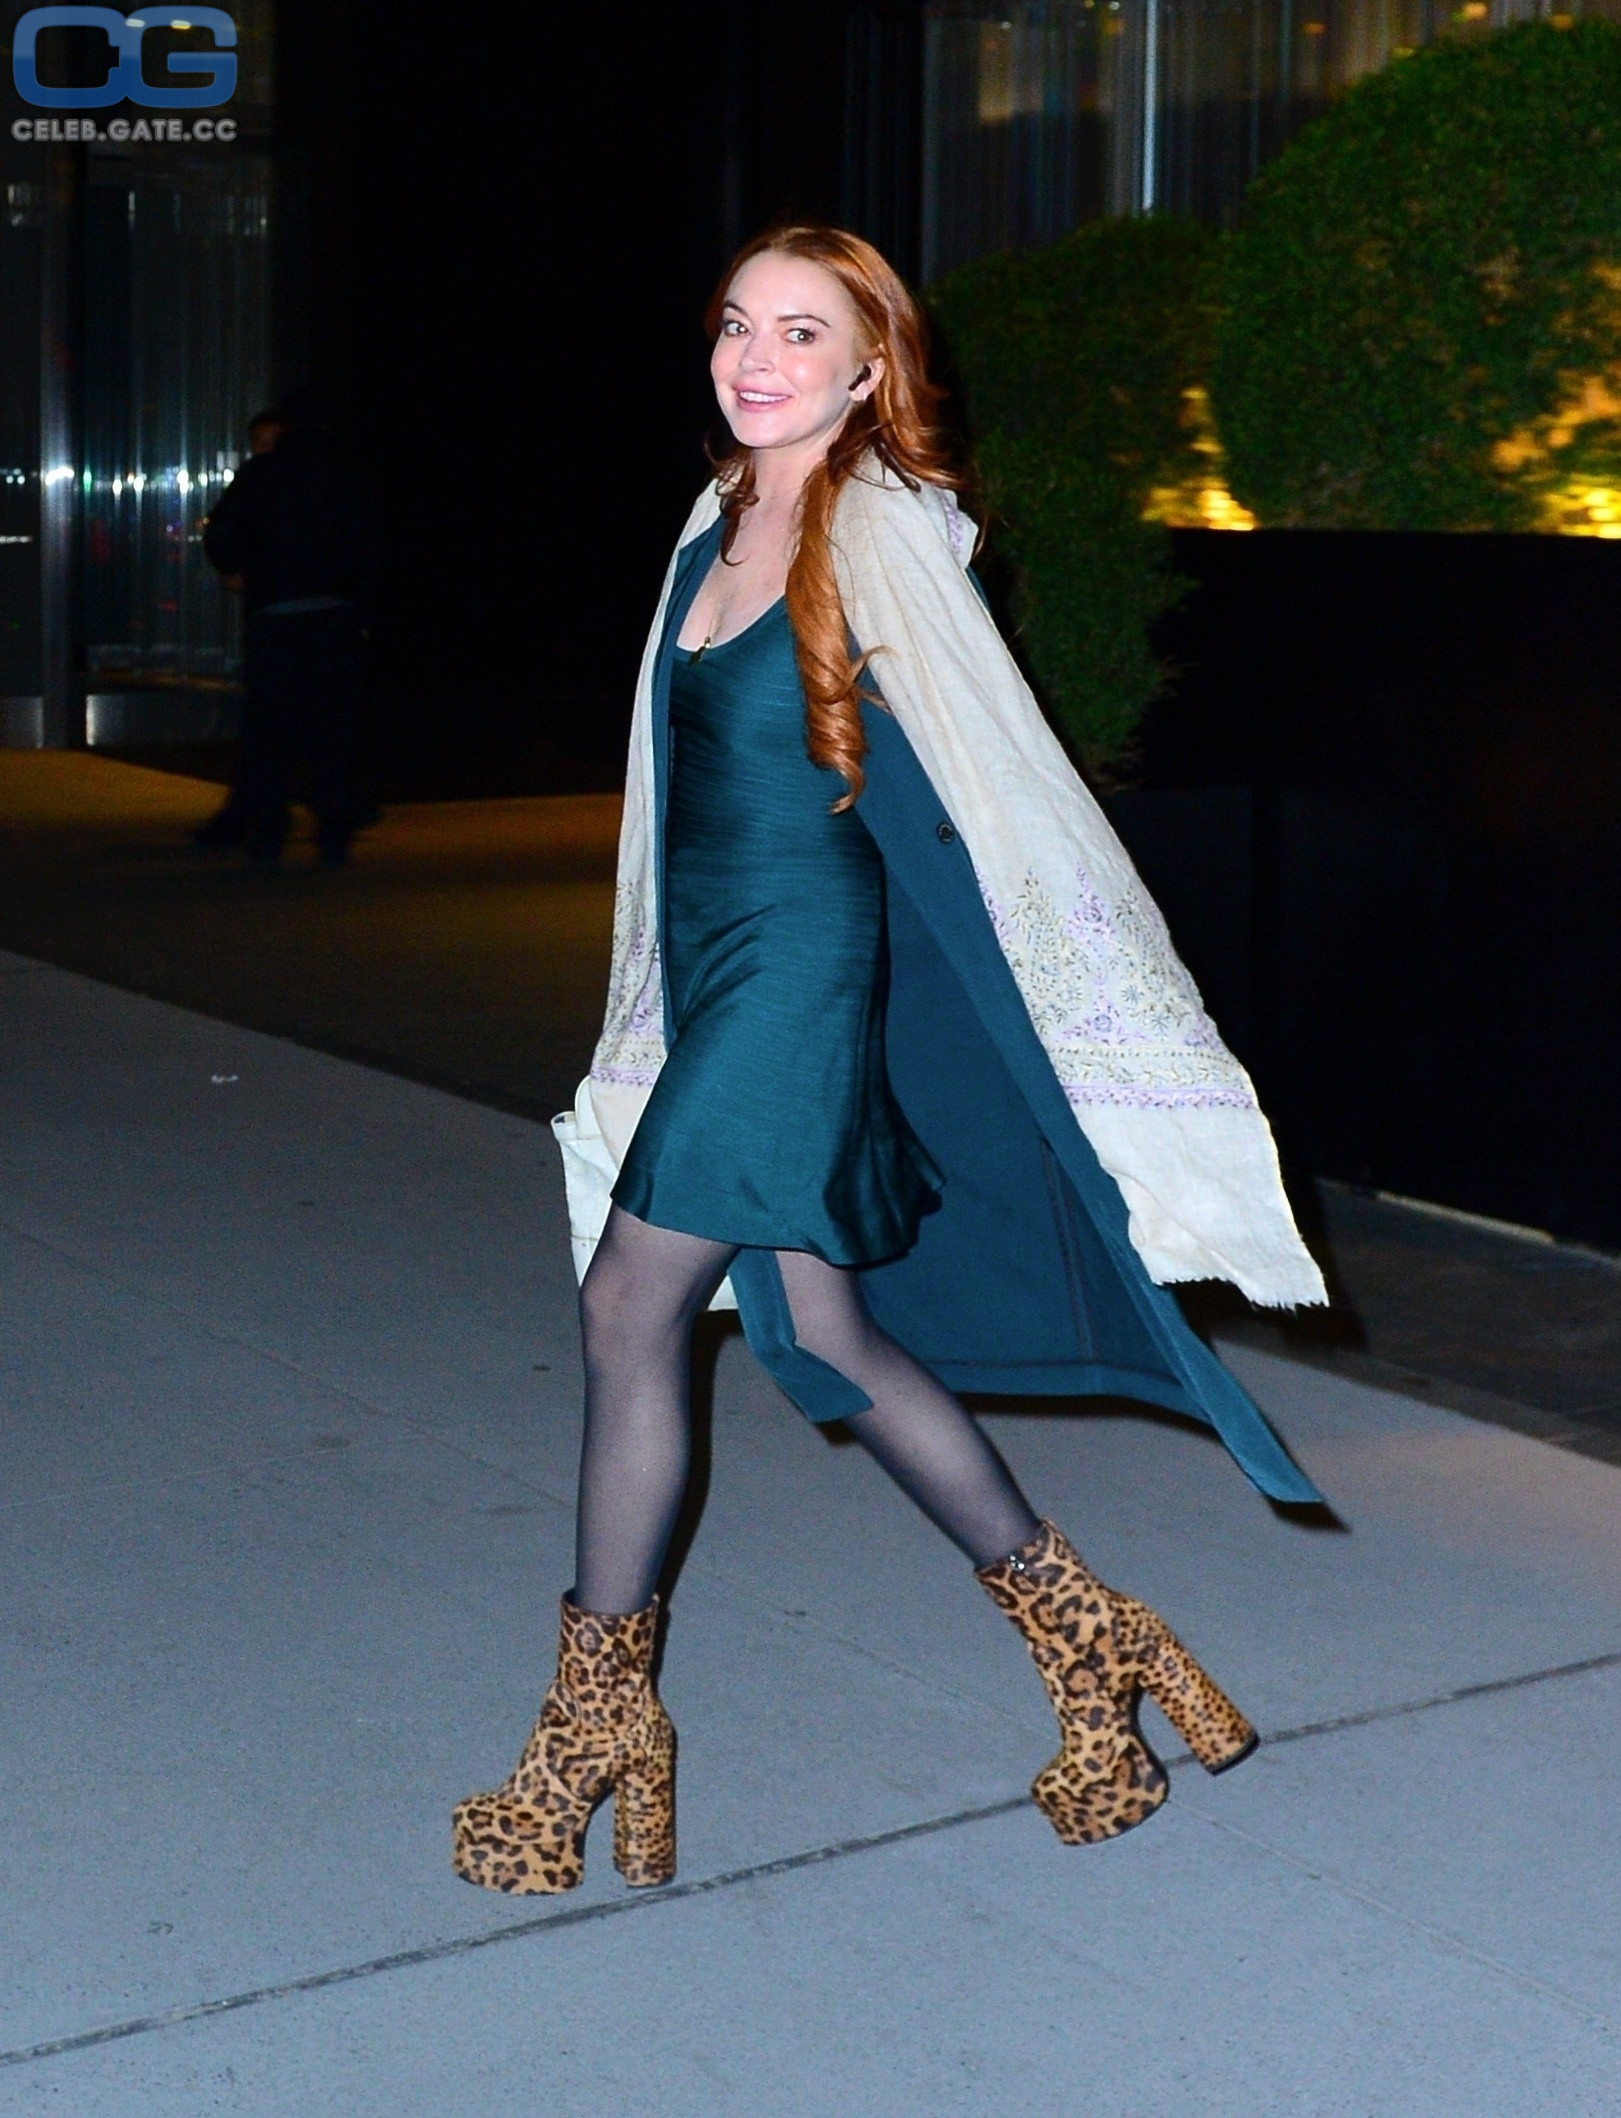 Lindsay Lohan high heels